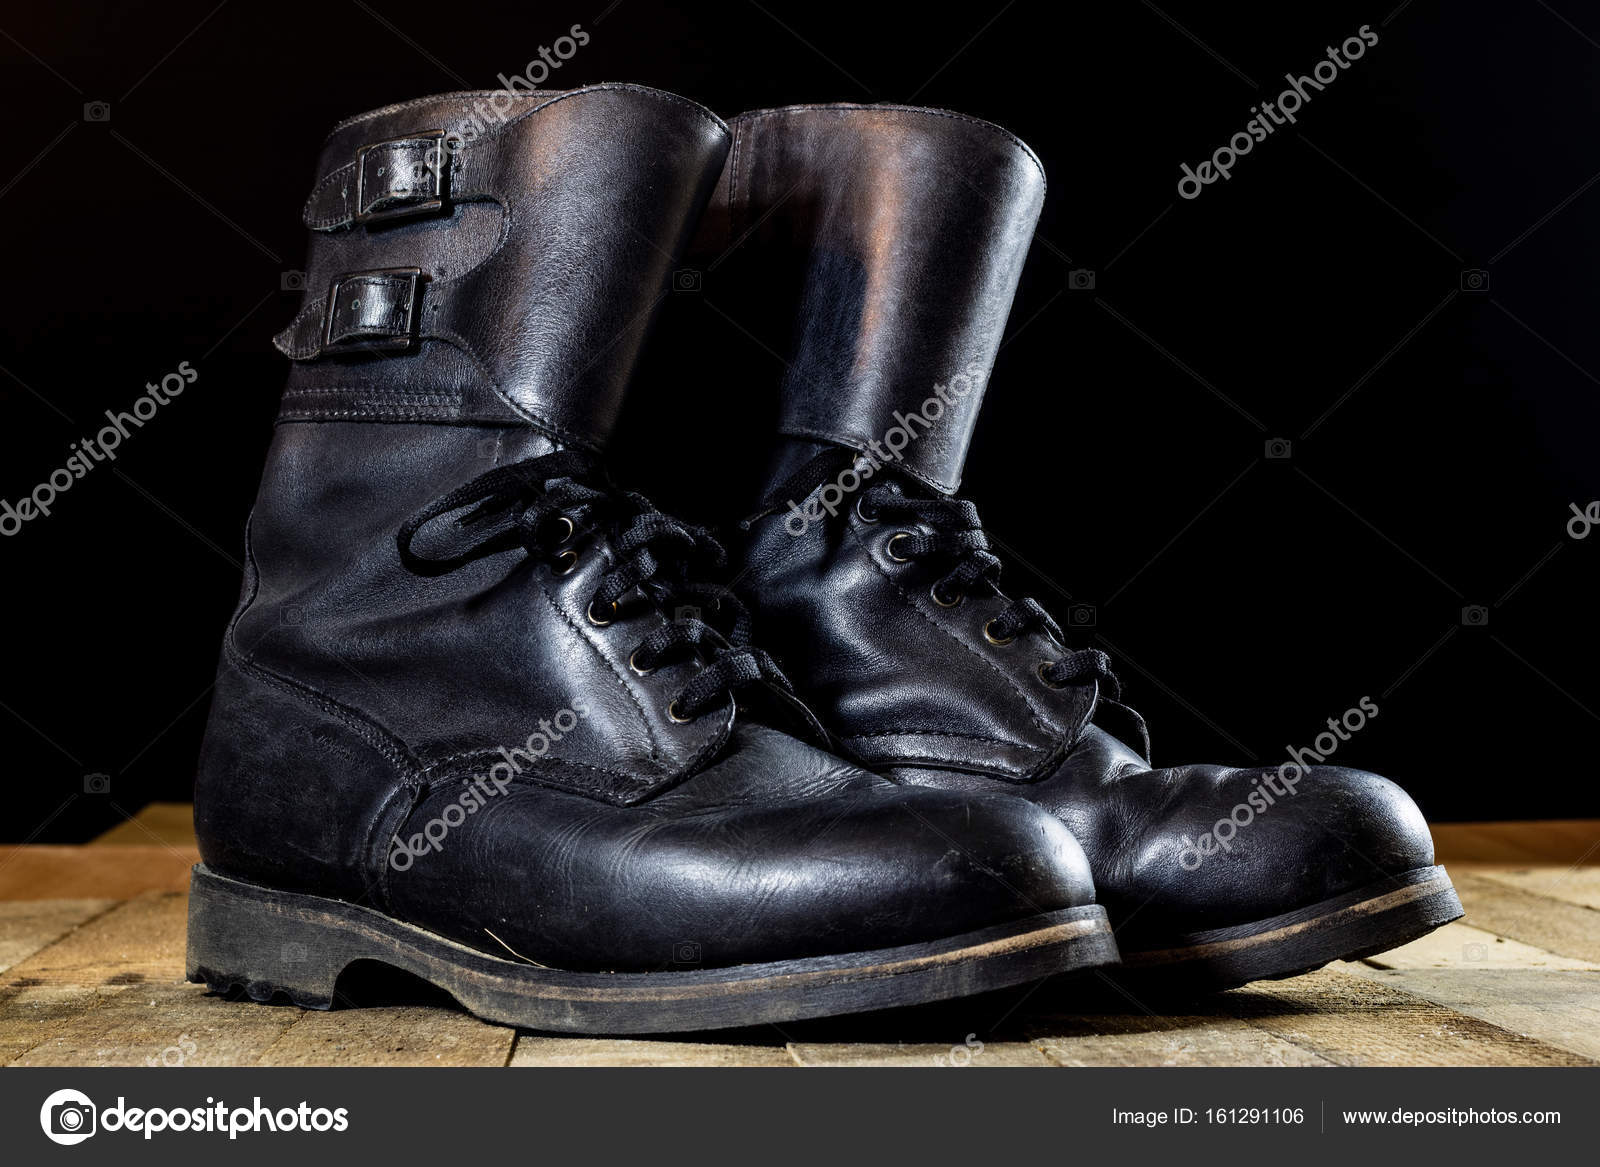 polish boots